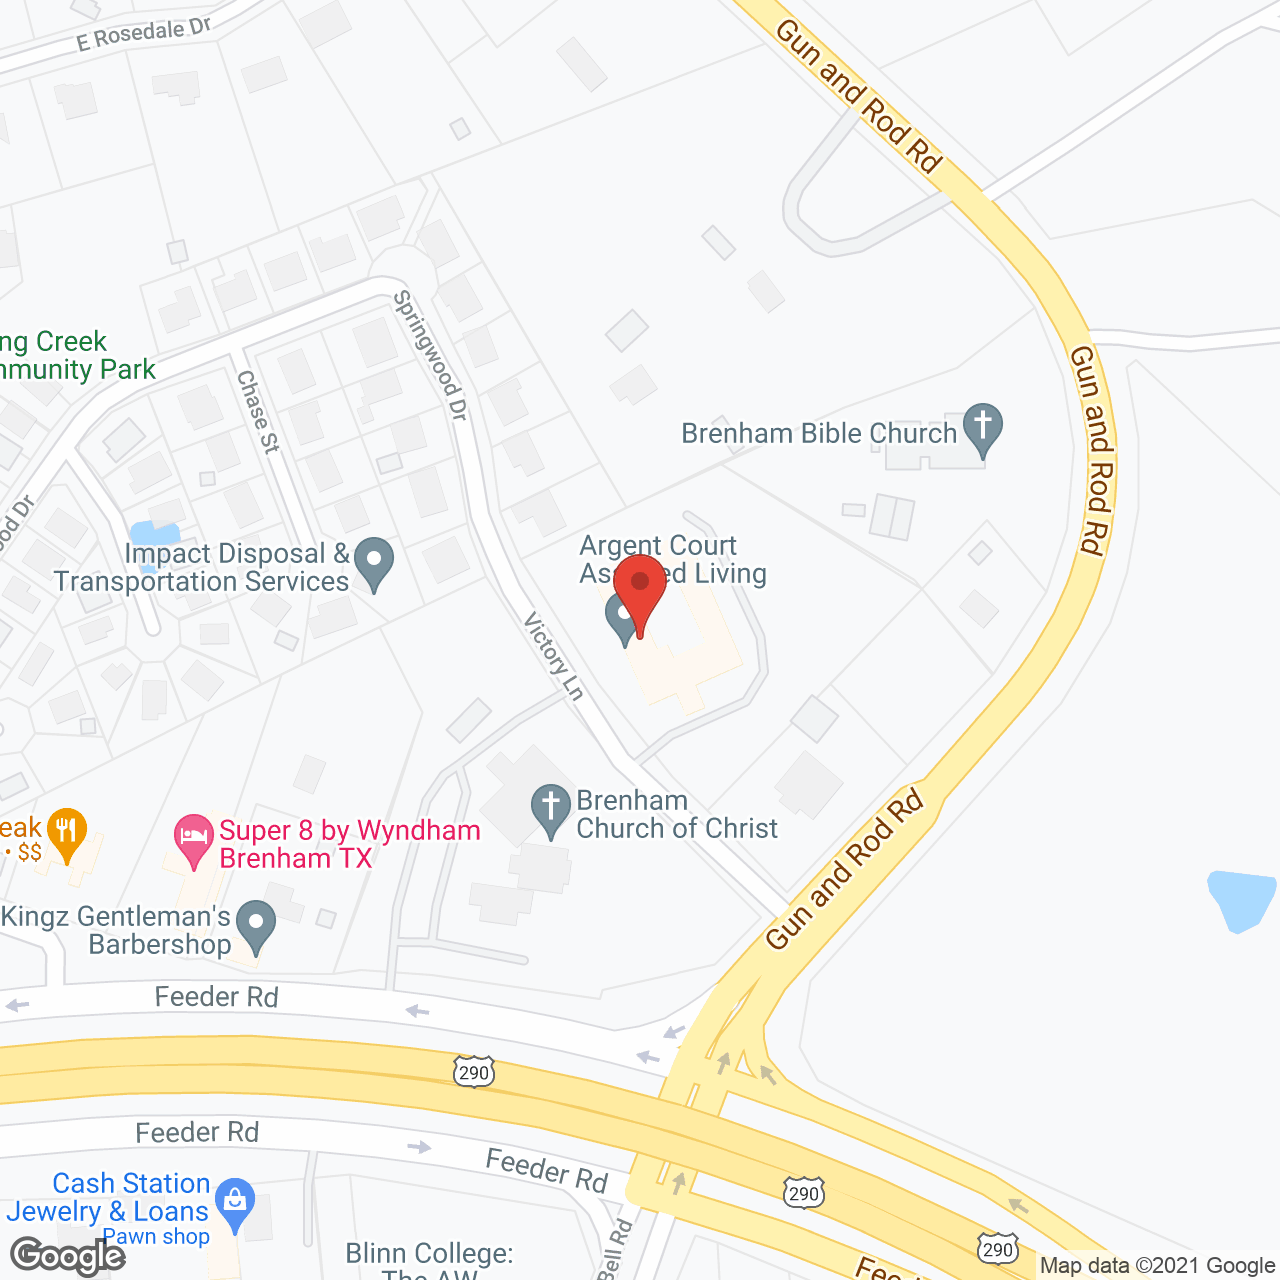 Argent Court of Brenham in google map